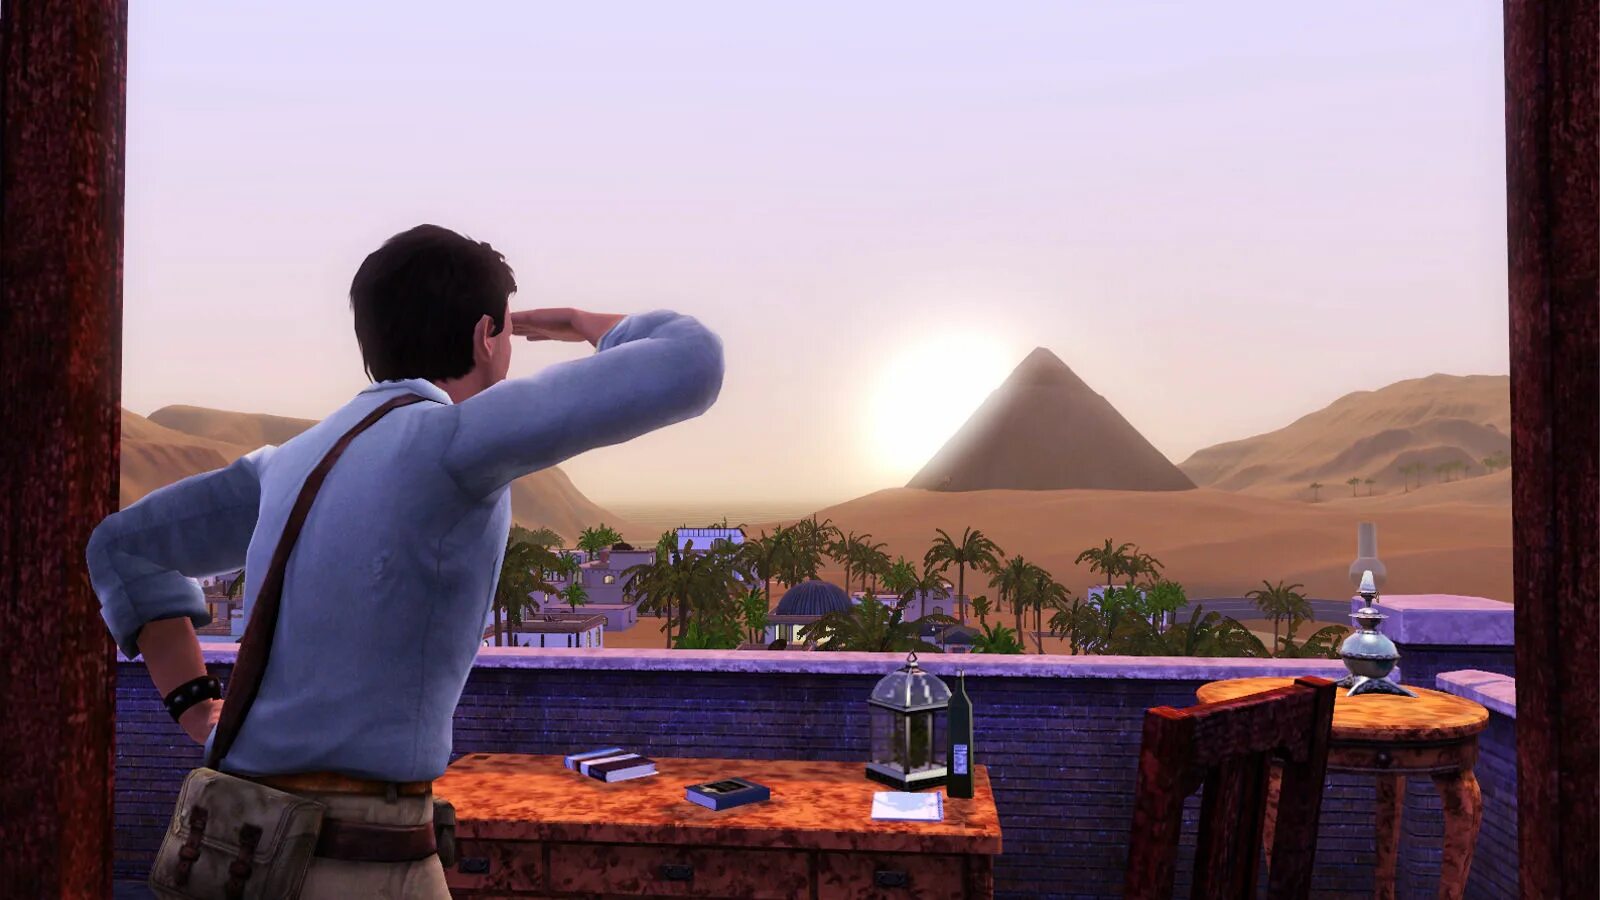 Sims 3 worlds. Симс 3 мир приключений. The SIMS 3 World Adventures Египет. Симс 3 дополнение мир приключений. Симс 3 путешествия.